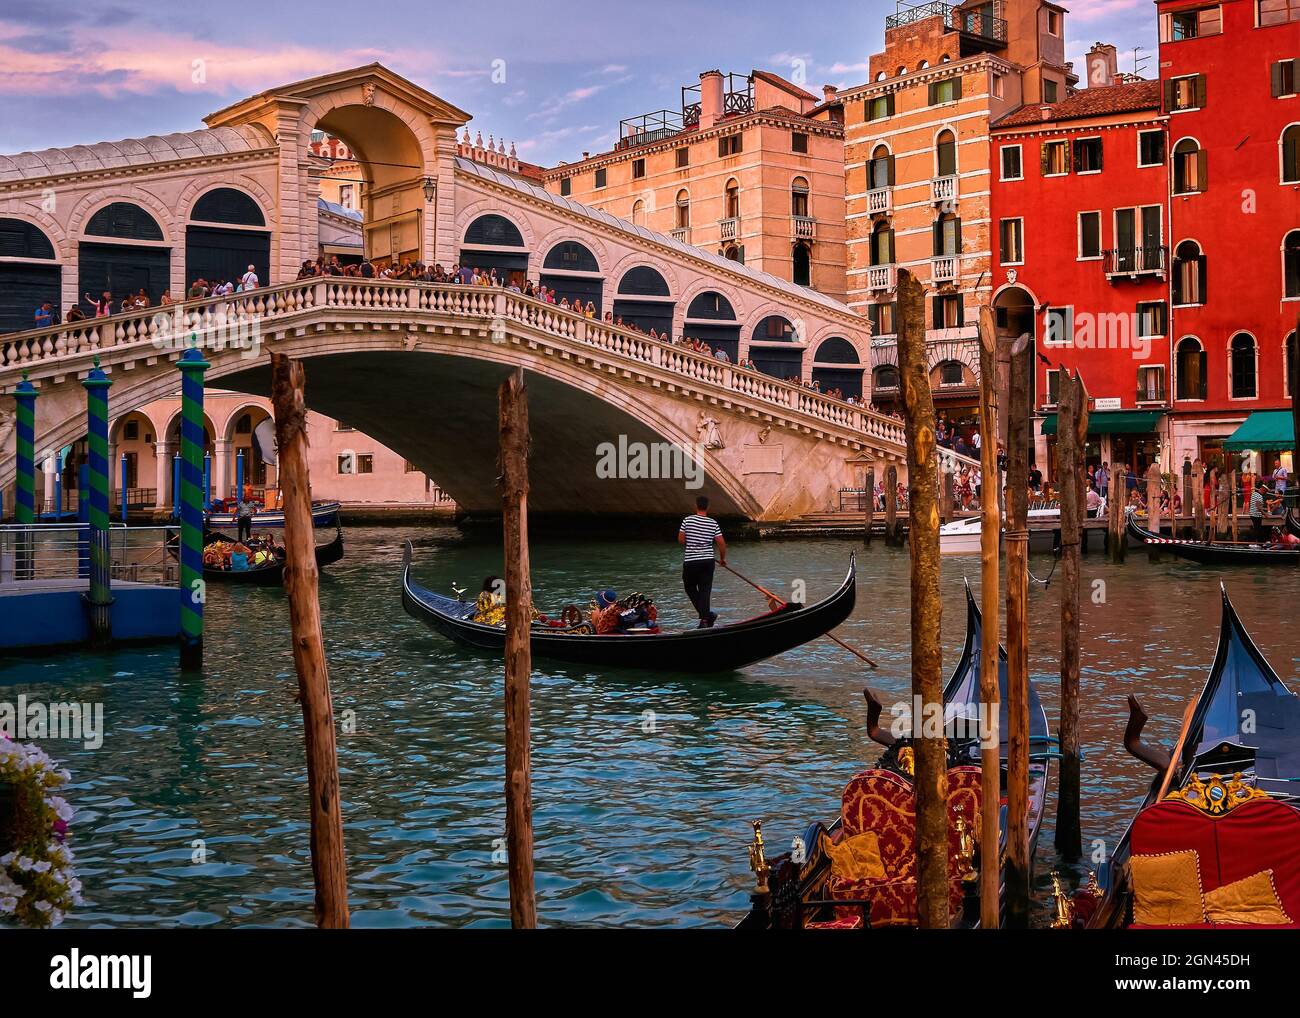 Blick auf den Sonnenuntergang über der berühmten Rialtobrücke oder der rialtobrücke über dem Canal Grande, Venedig, Italien. Ikonisches Reiseziel der UNESCO-Weltkulturerbestadt Stockfoto